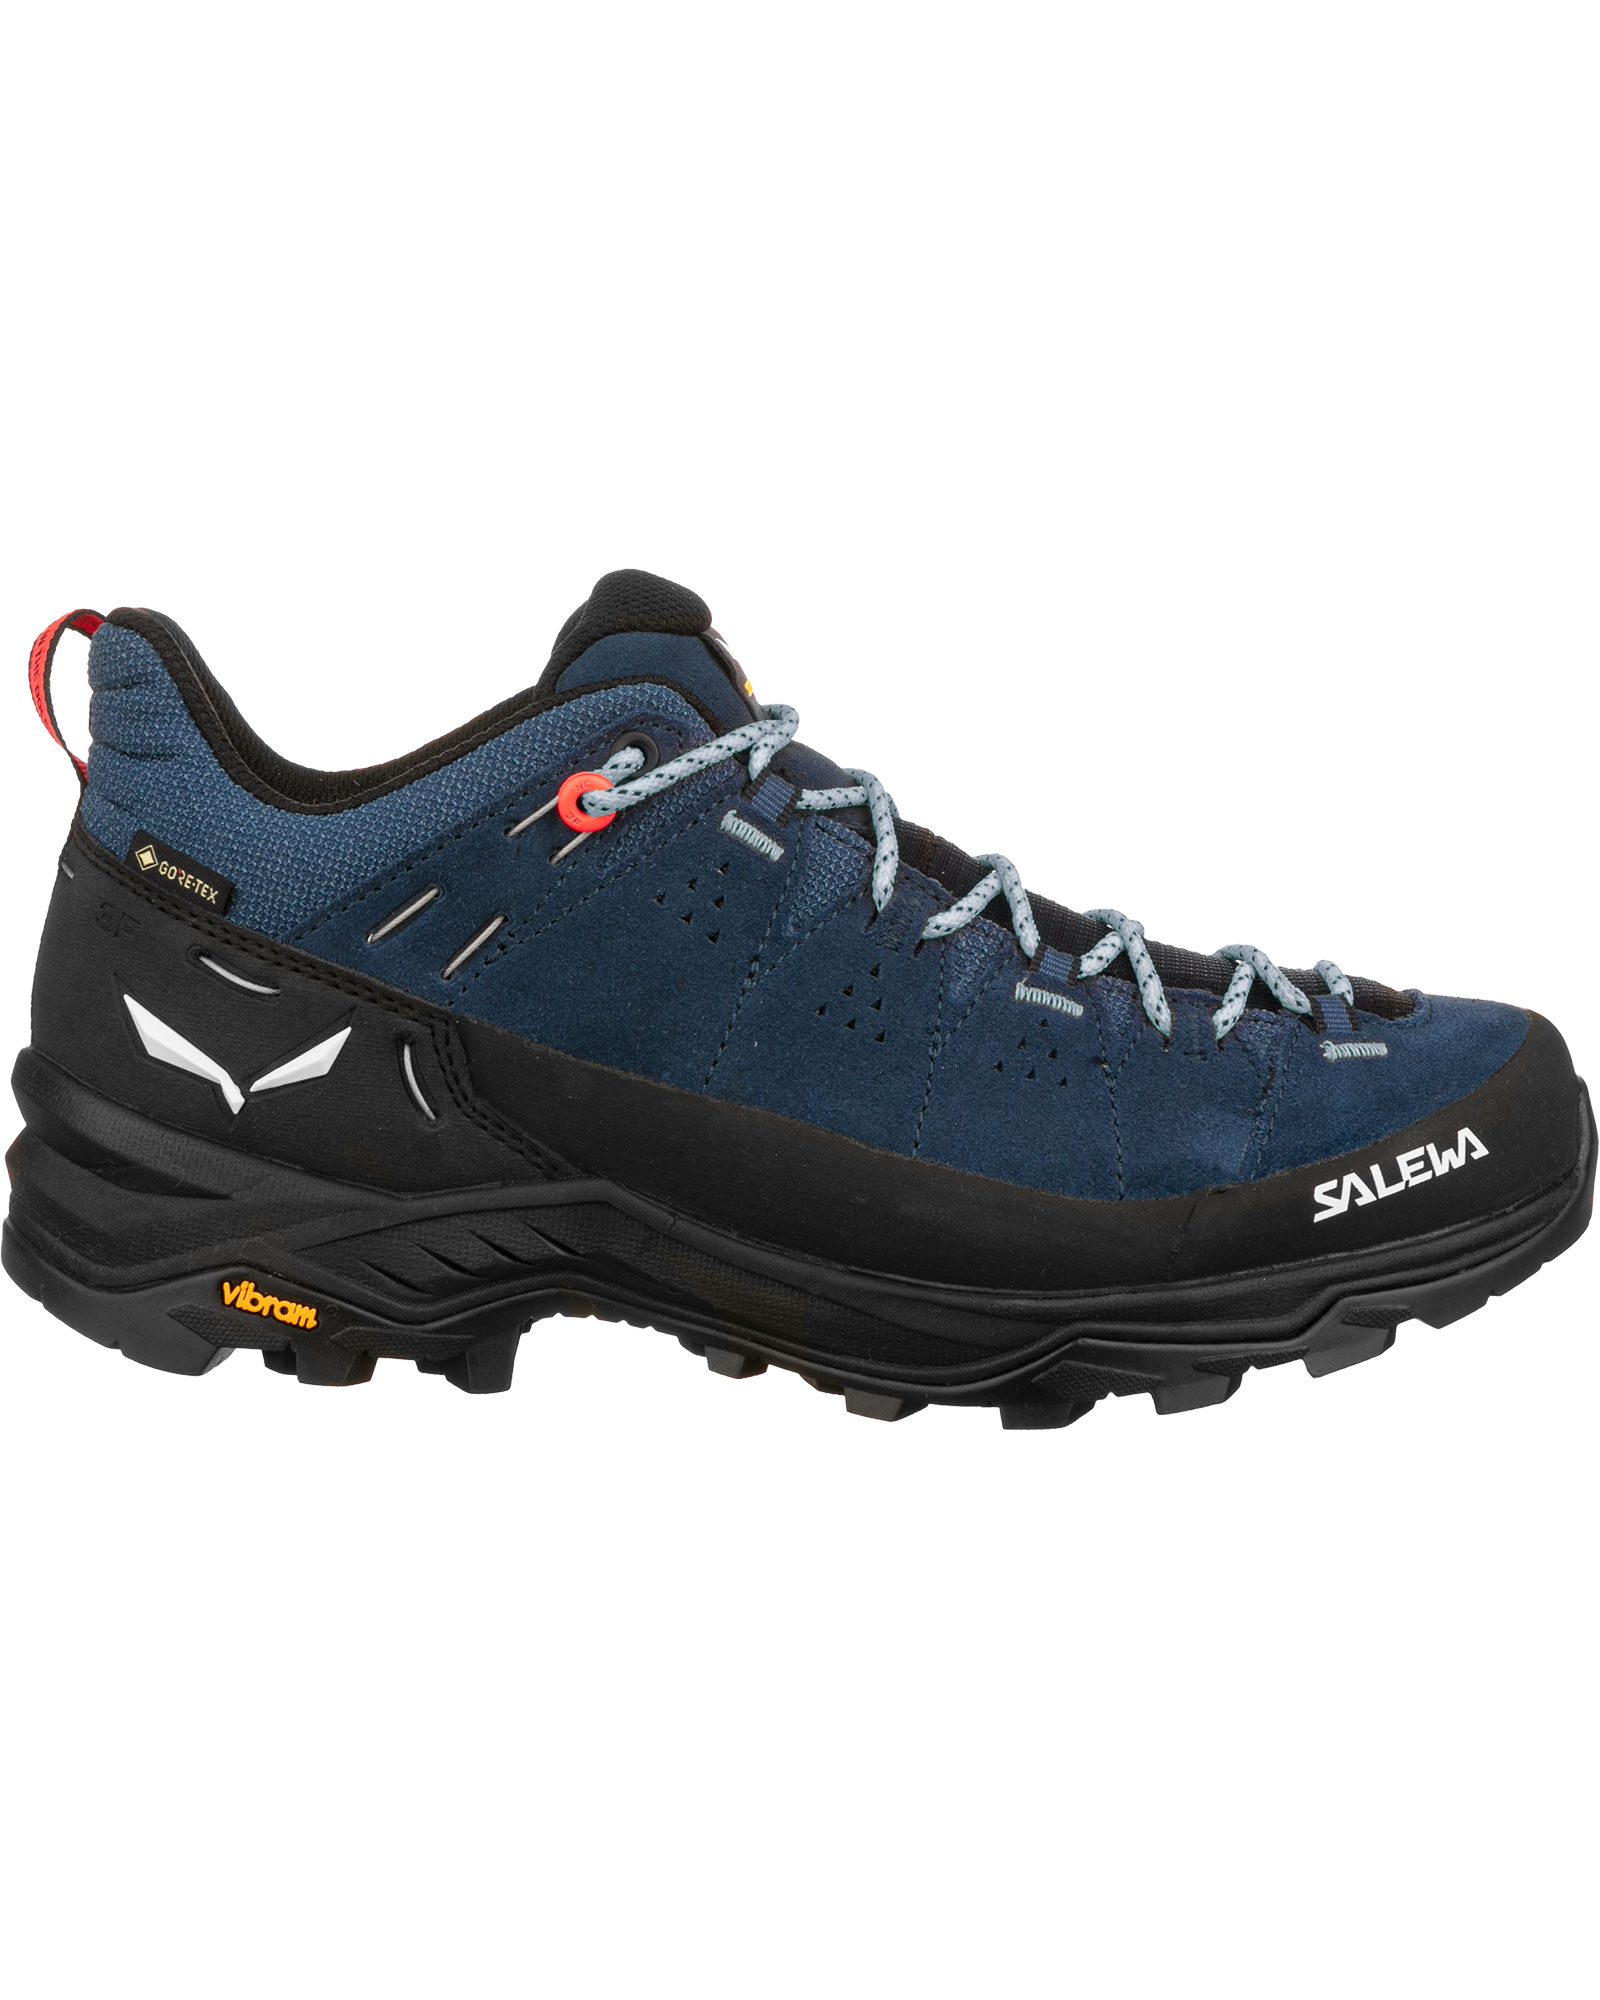 Salewa Alp Trainer 2 GORE TEX Women’s Shoes - Dark Denim UK 4.5